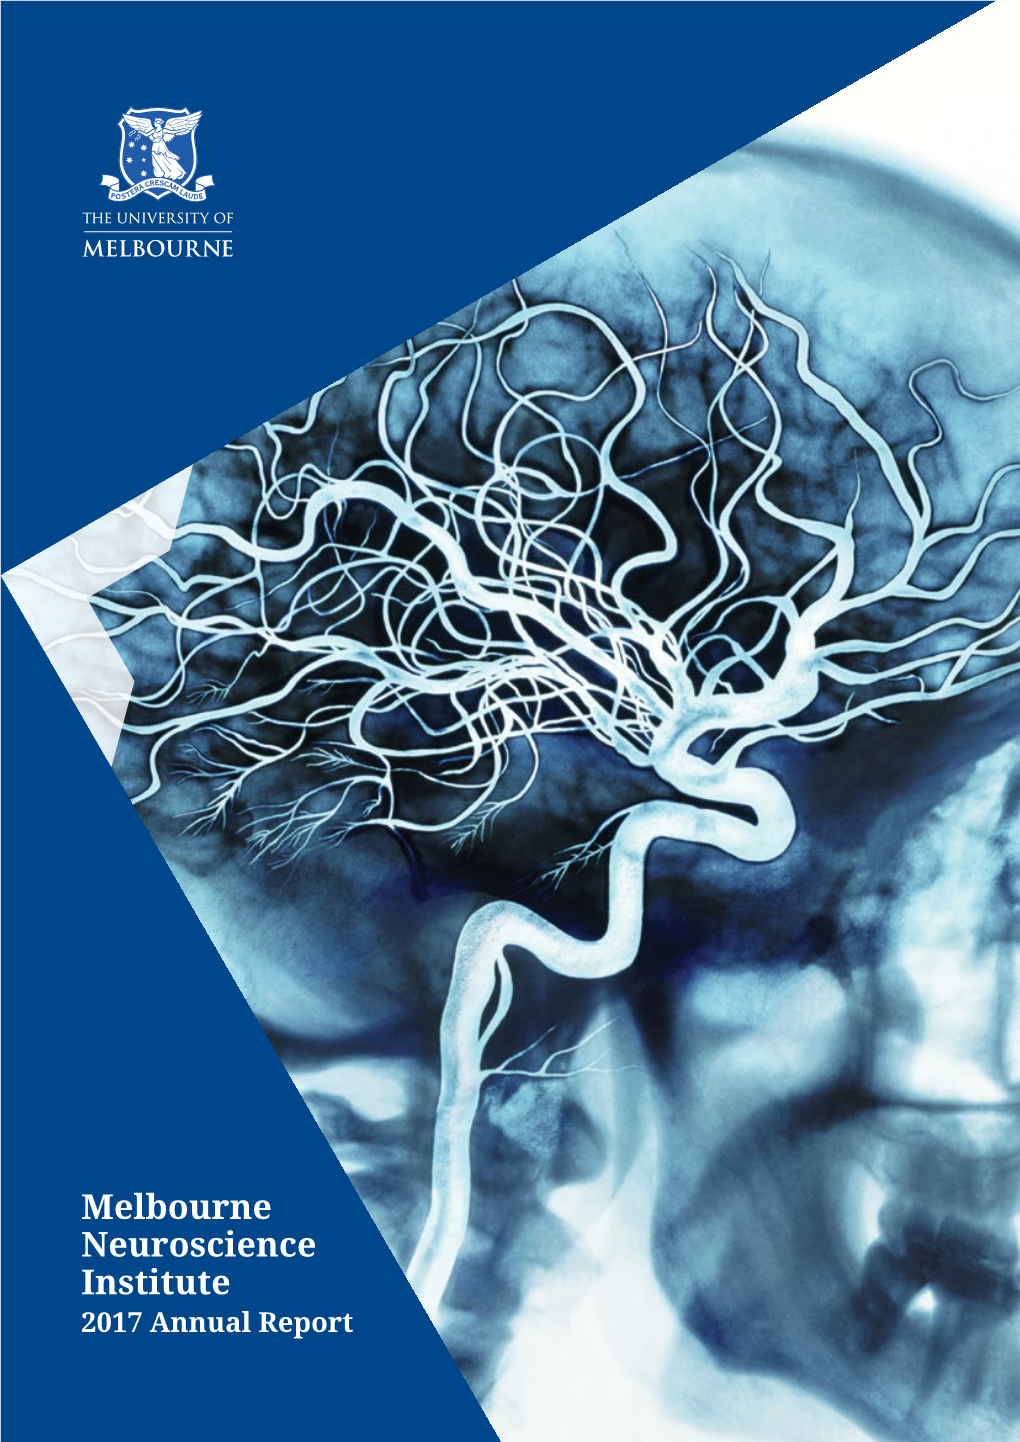 Melbourne Neuroscience Institute 2017 Annual Report